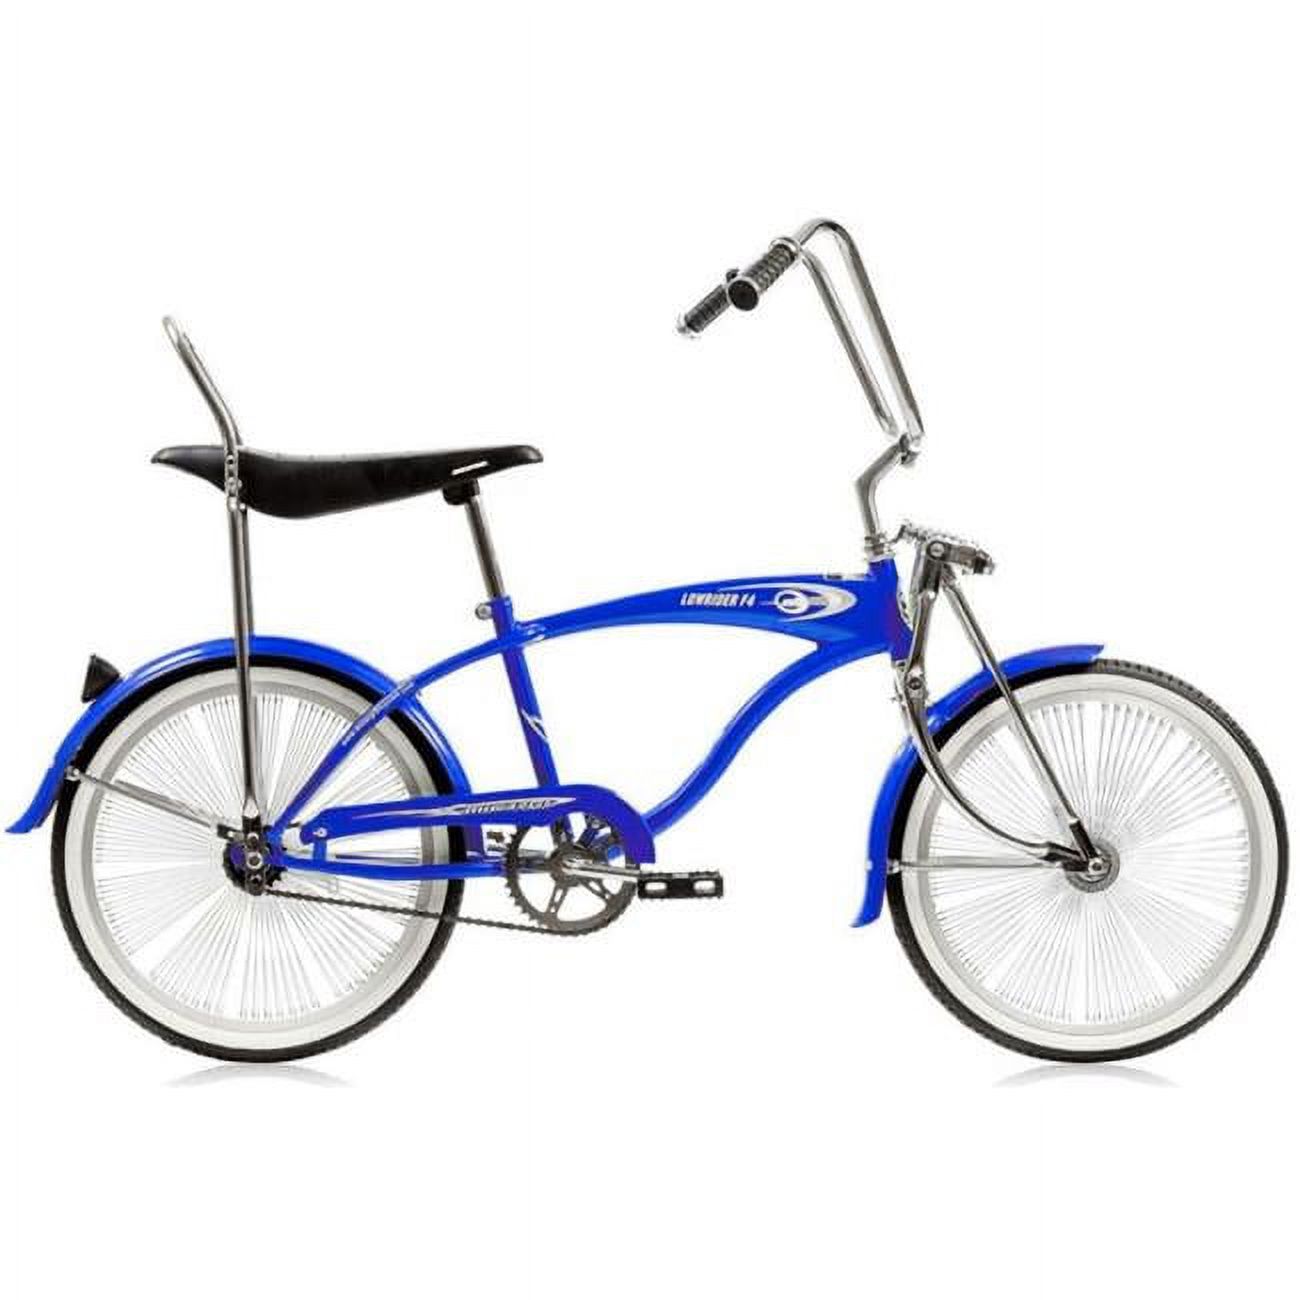 Micargi LOWRIDER F4-BL F4 Lowrider Bicycle, Blue - image 1 of 1